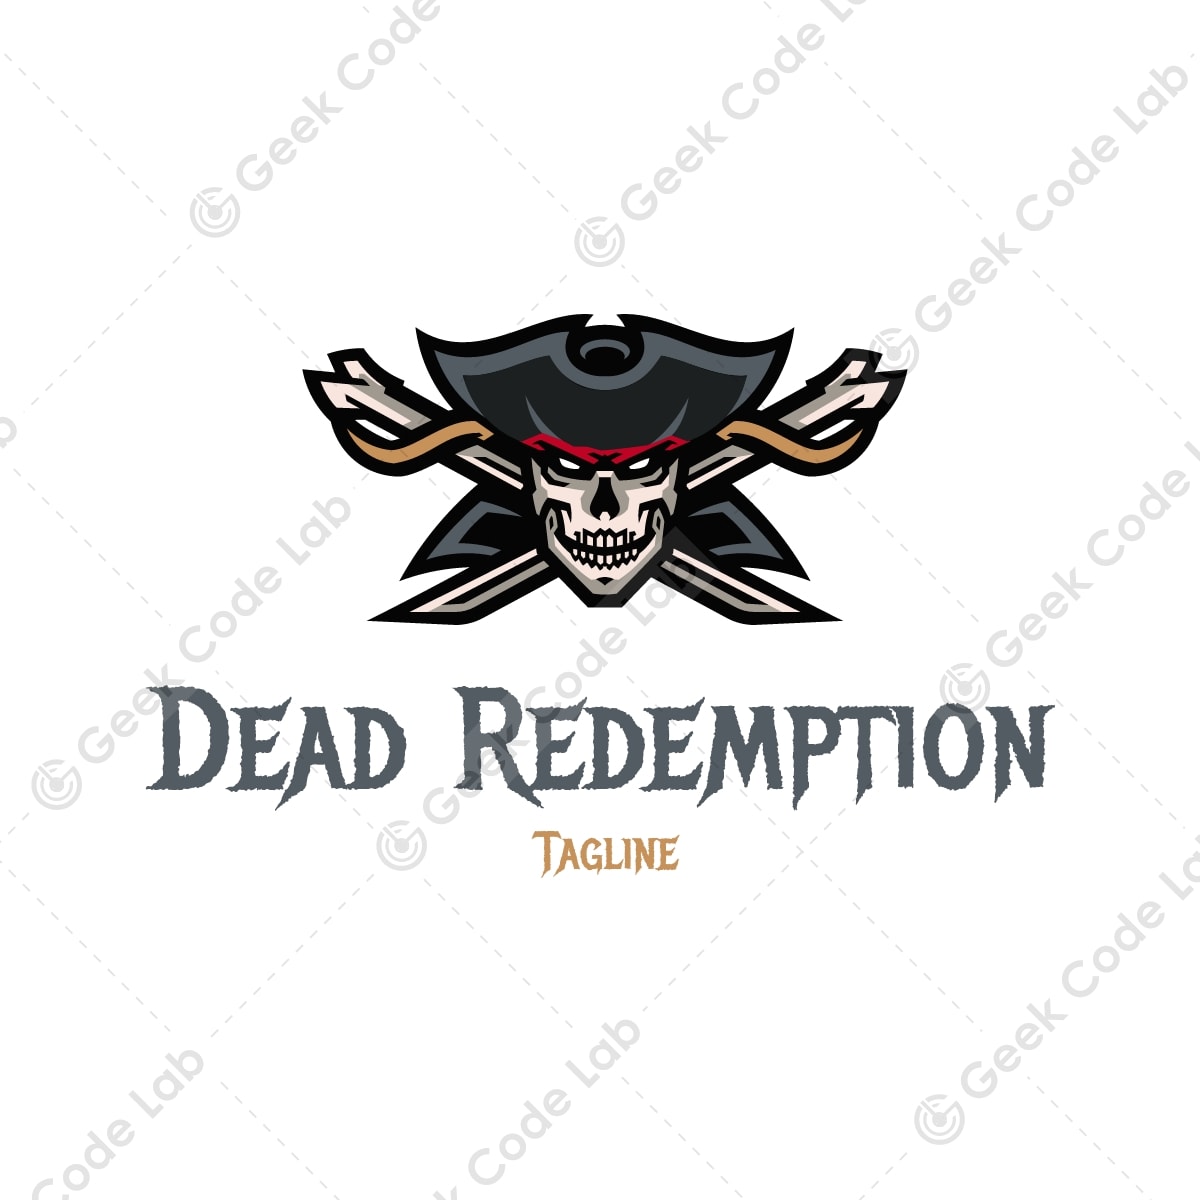 Dead Redemption